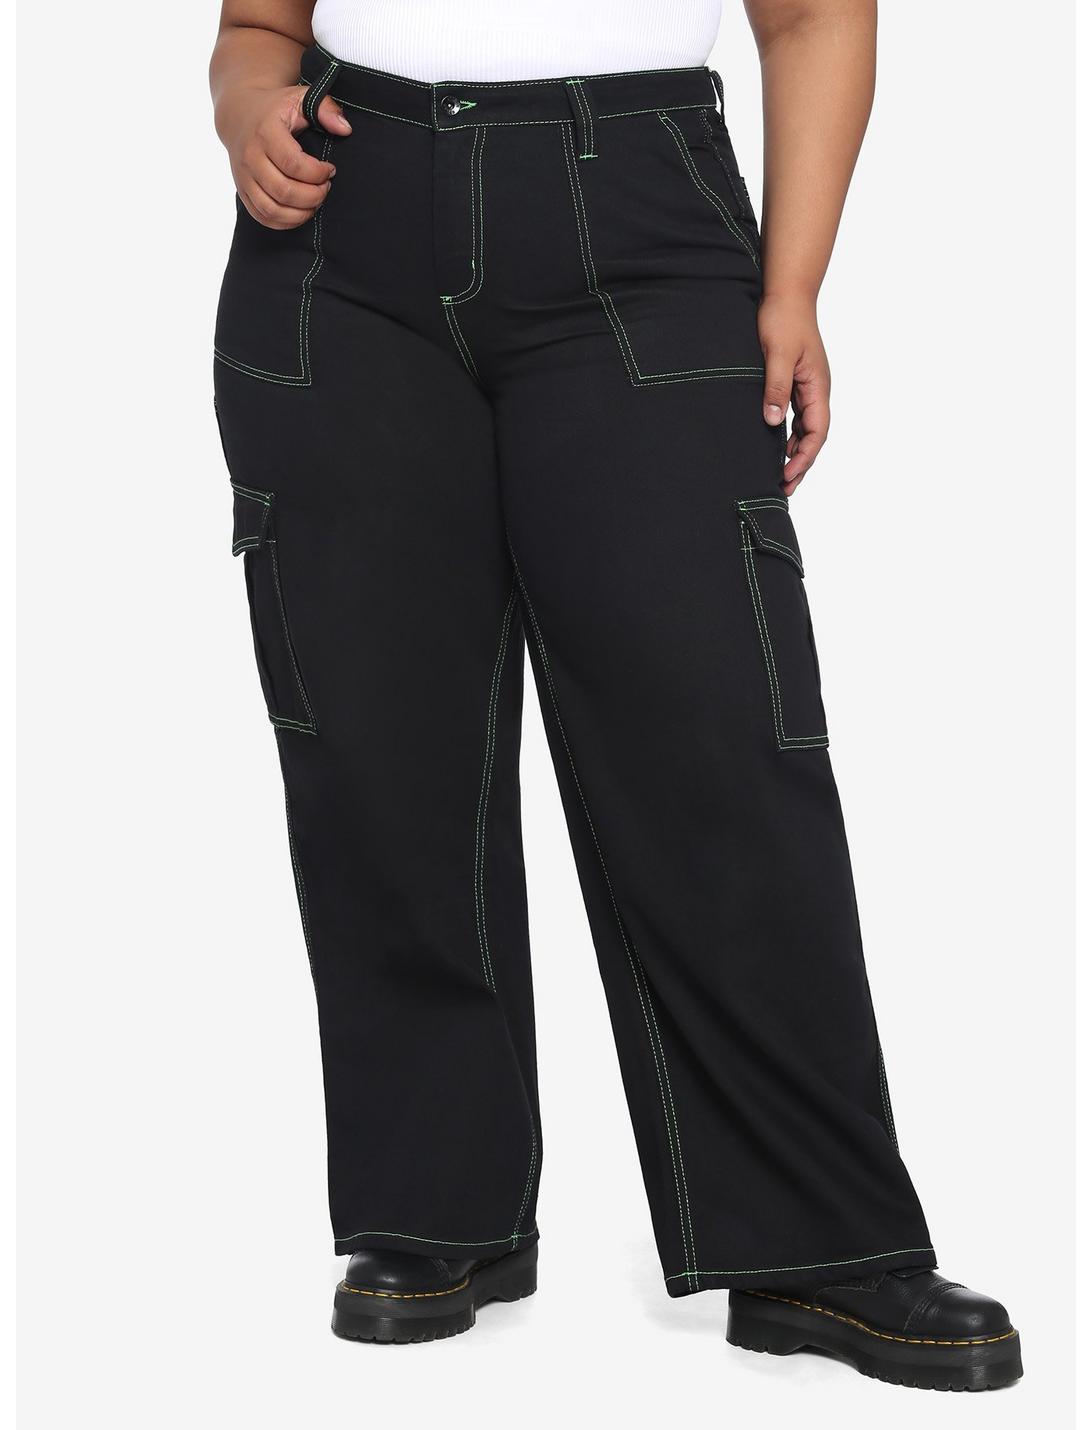 HT Denim Black & Green Stitch Hi-Rise Carpenter Pants Plus Size 